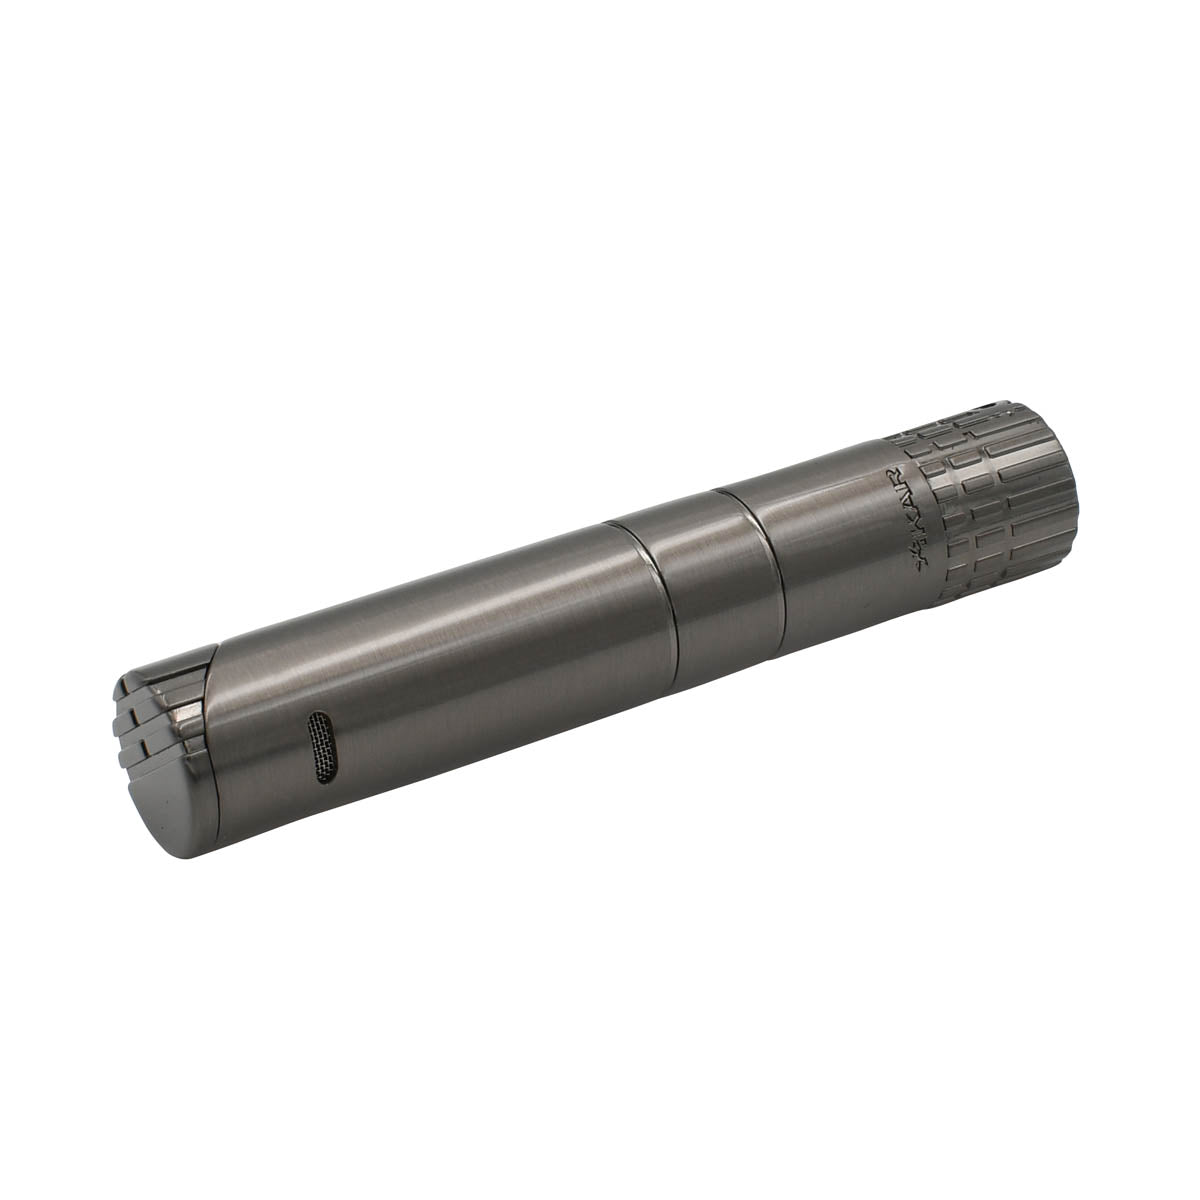 XIKAR® Turrim Single-jet Flame Lighter